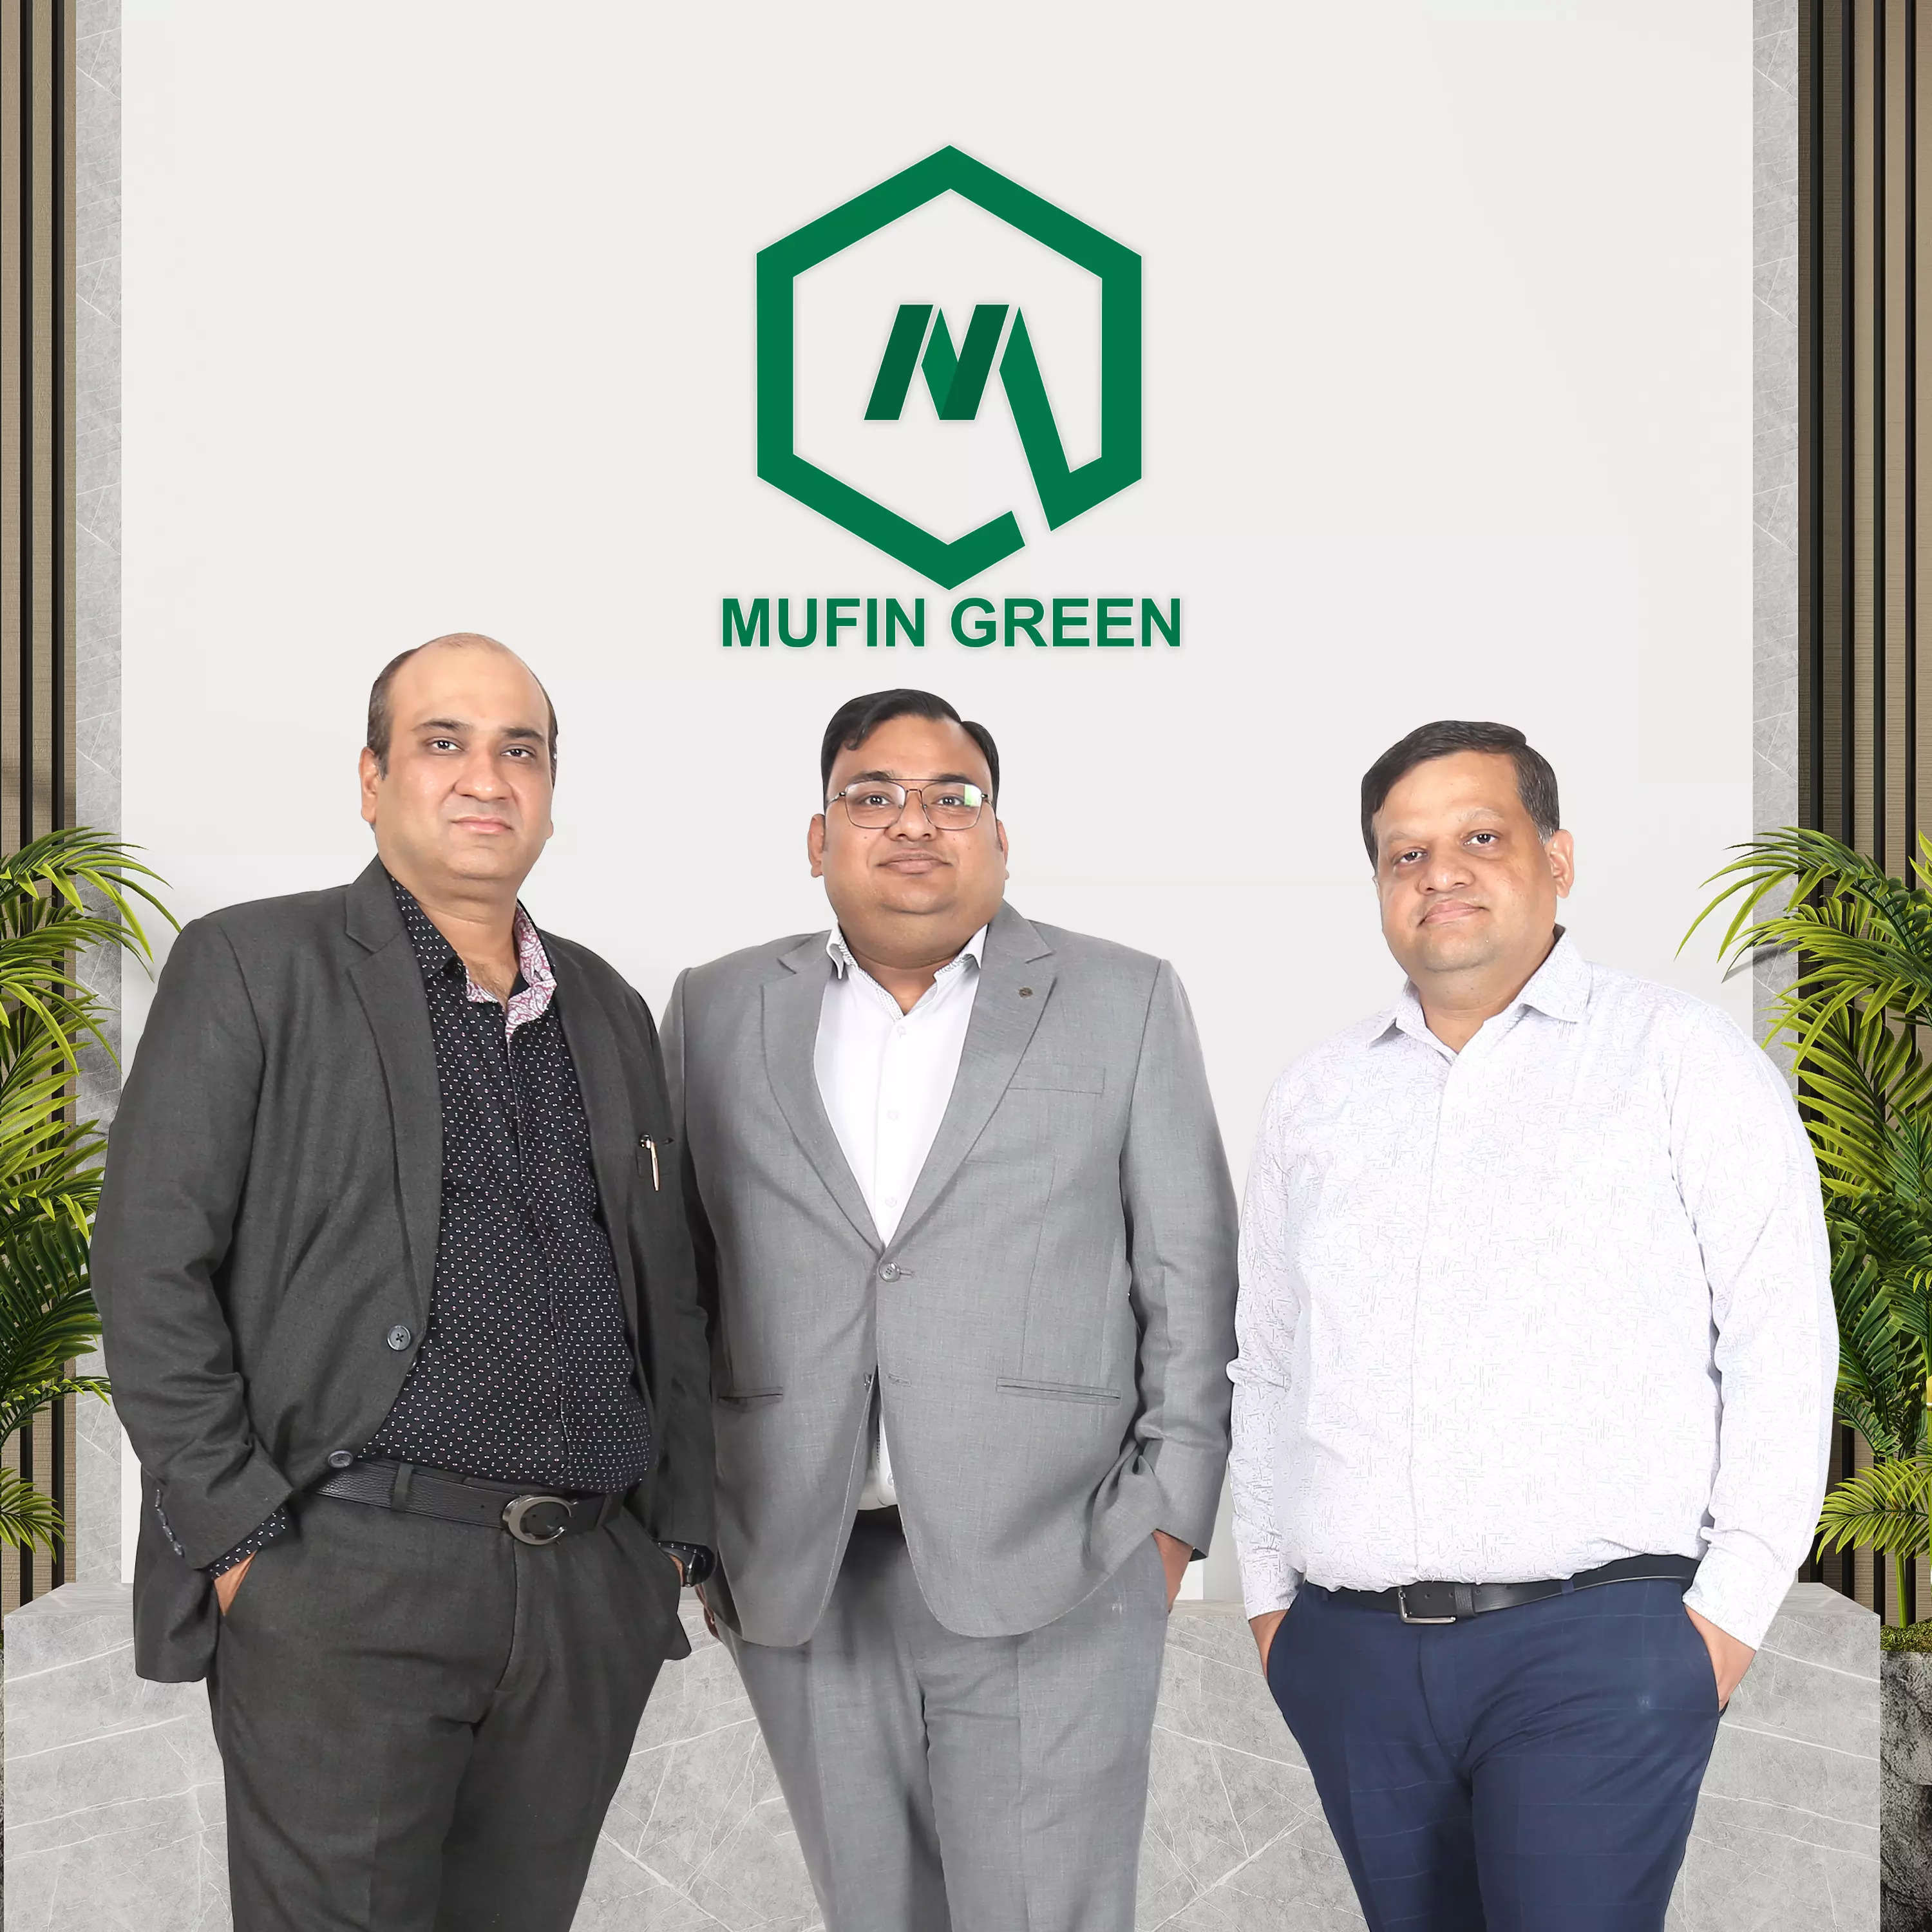  Mufin Green Finance Senior leadership with logo